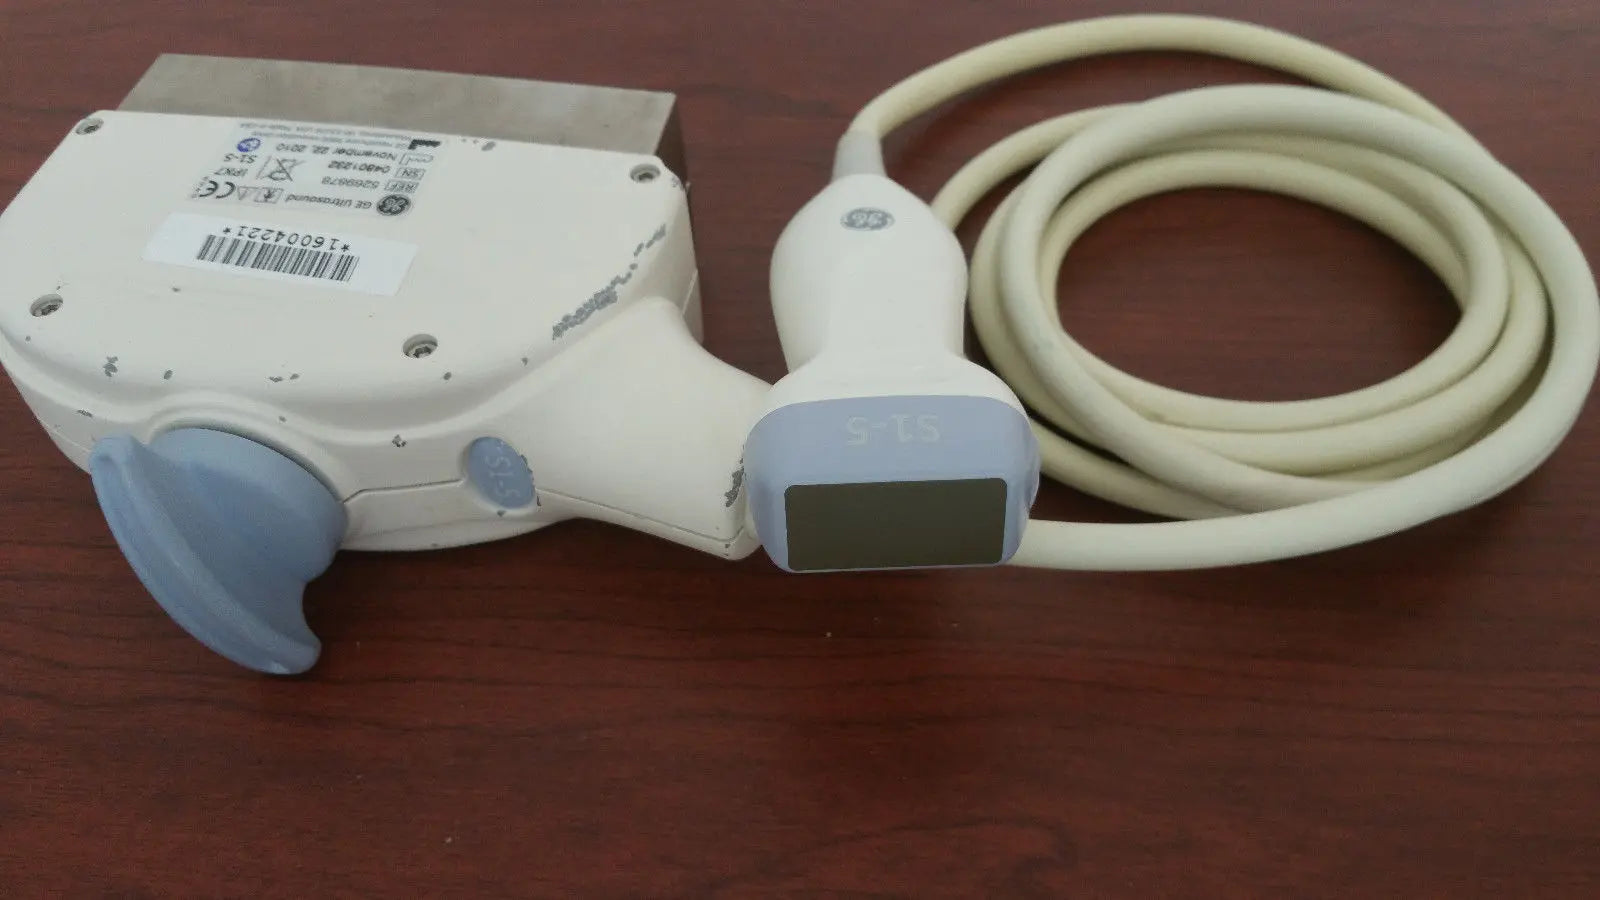 GE S1-5 Ultrasound Probe